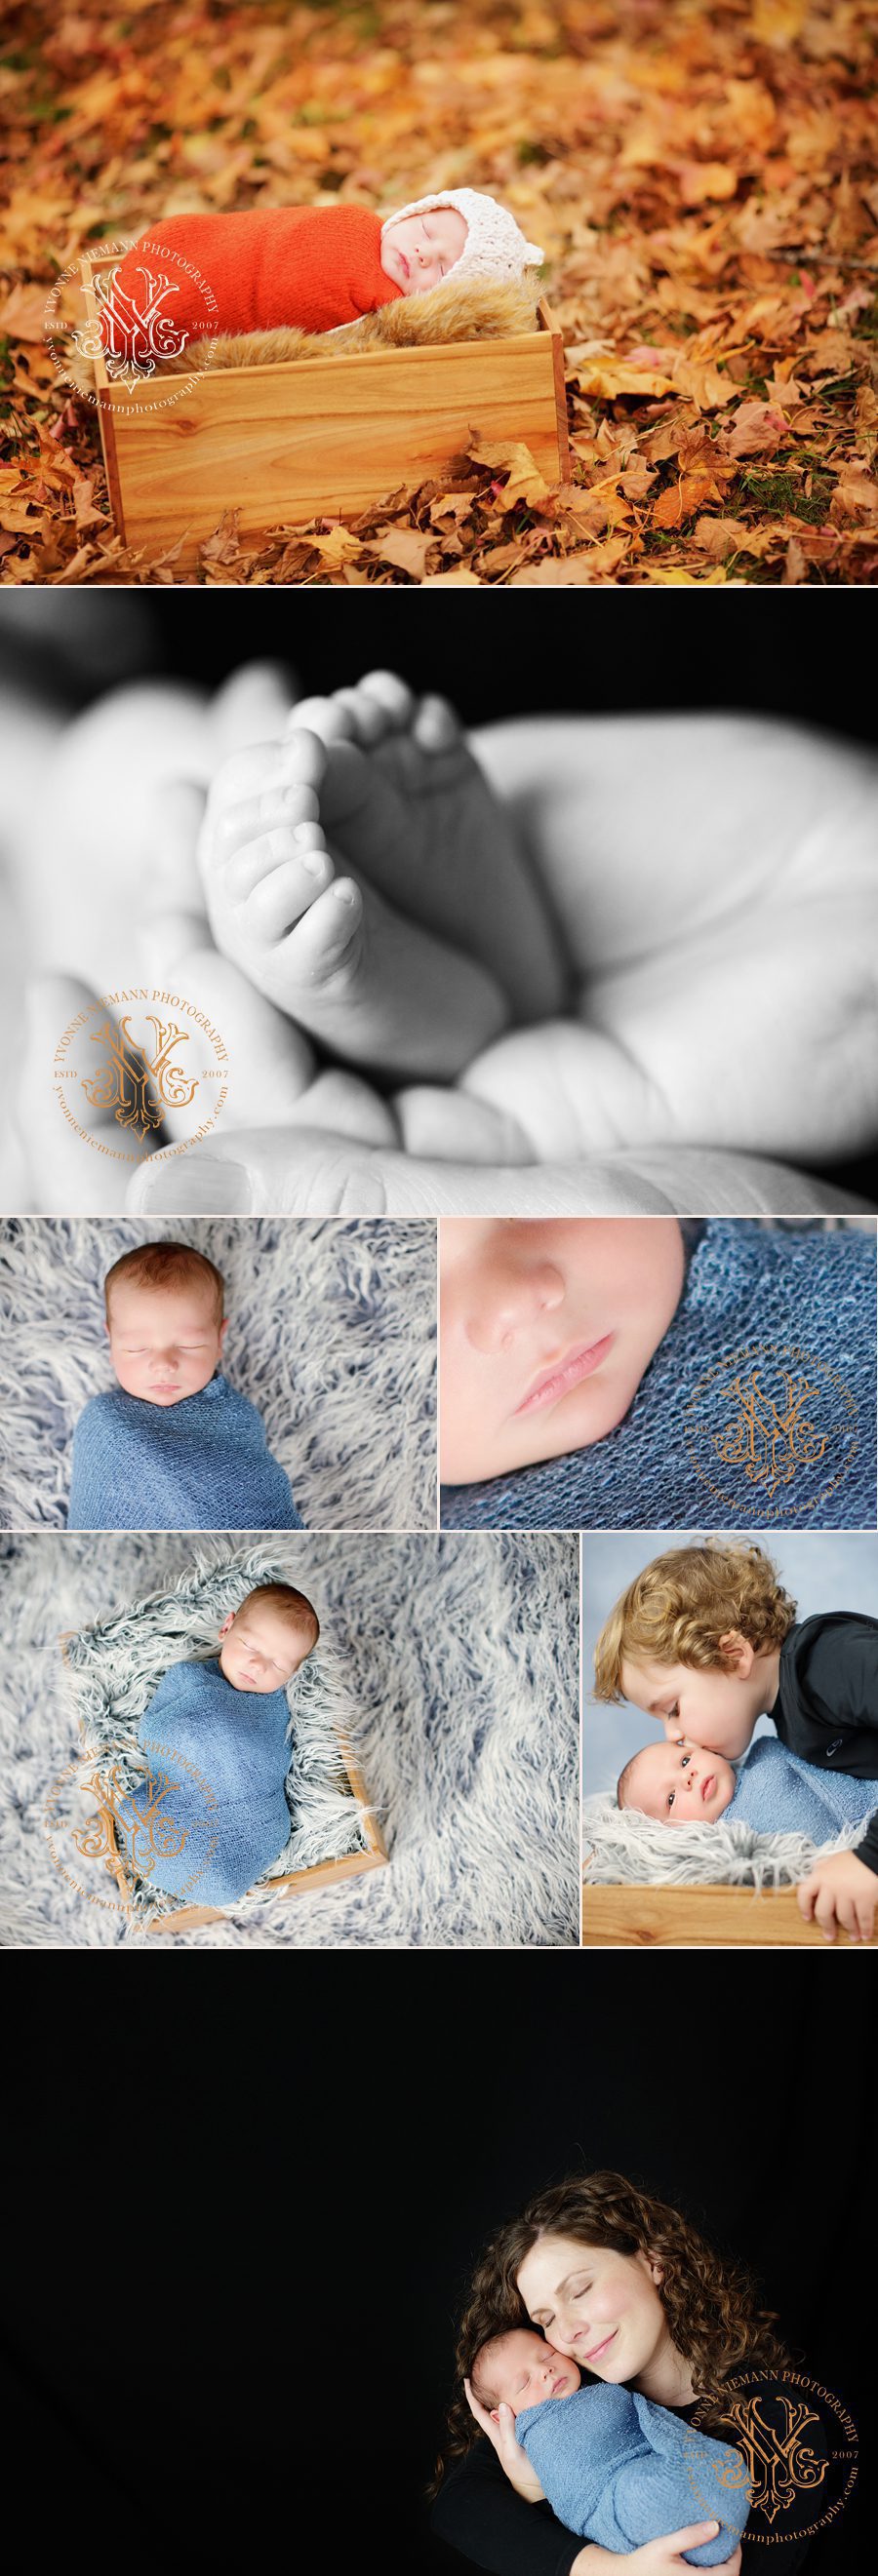 Newborn Portraits taken by Yvonne Niemann Photography on location in St. Louis, MO.